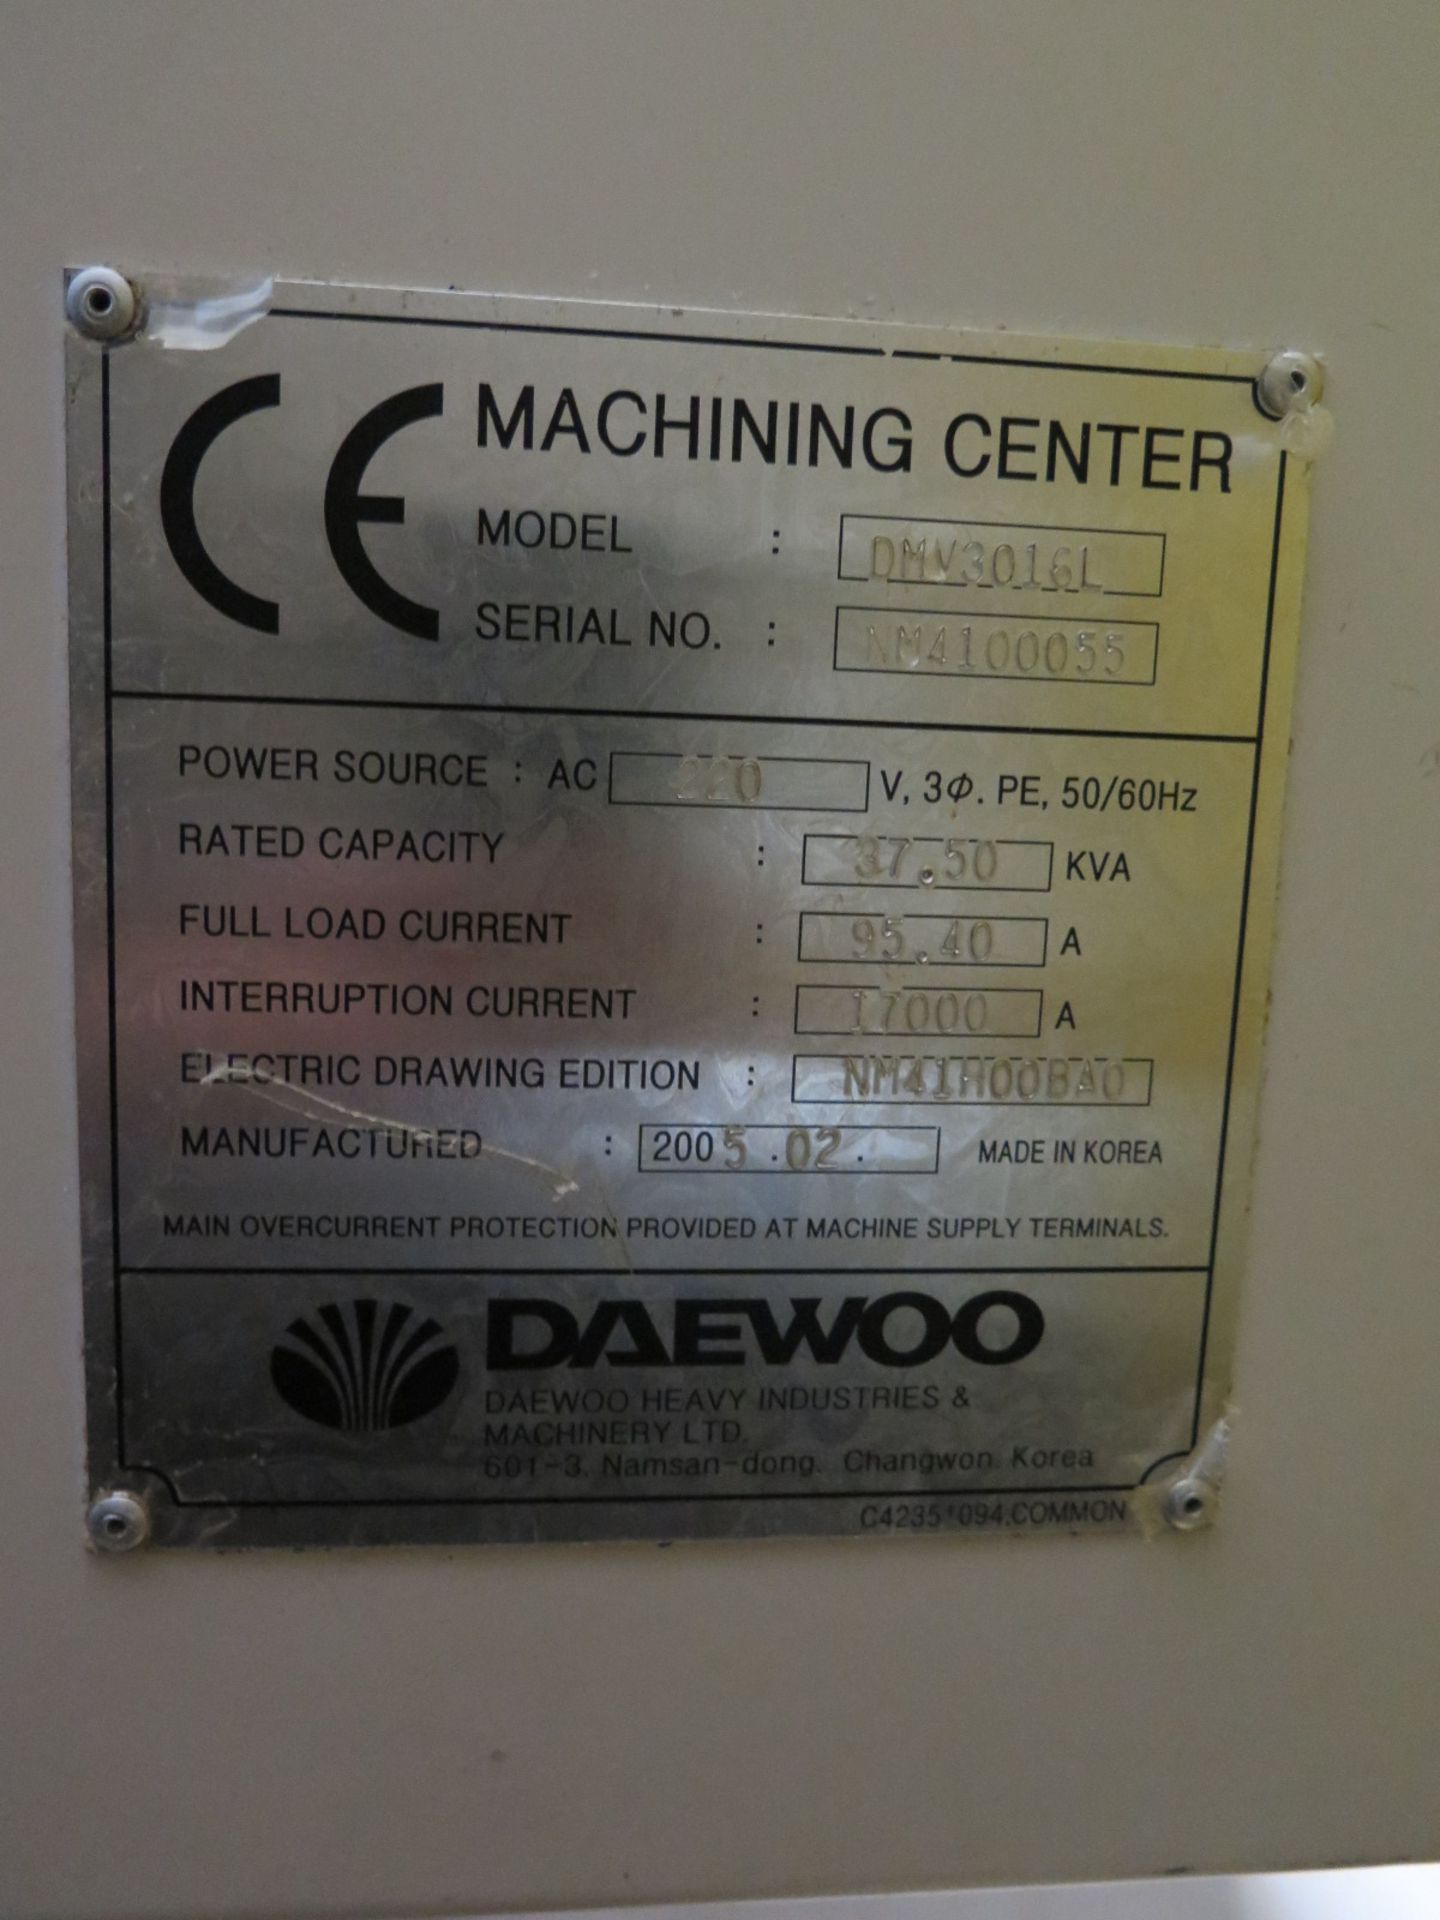 2005 Daewoo Diamond Series DMV3016L CNC Vertical Machining Center s/n NM4100055 w/ Daewoo-Fanuc i- - Image 8 of 8